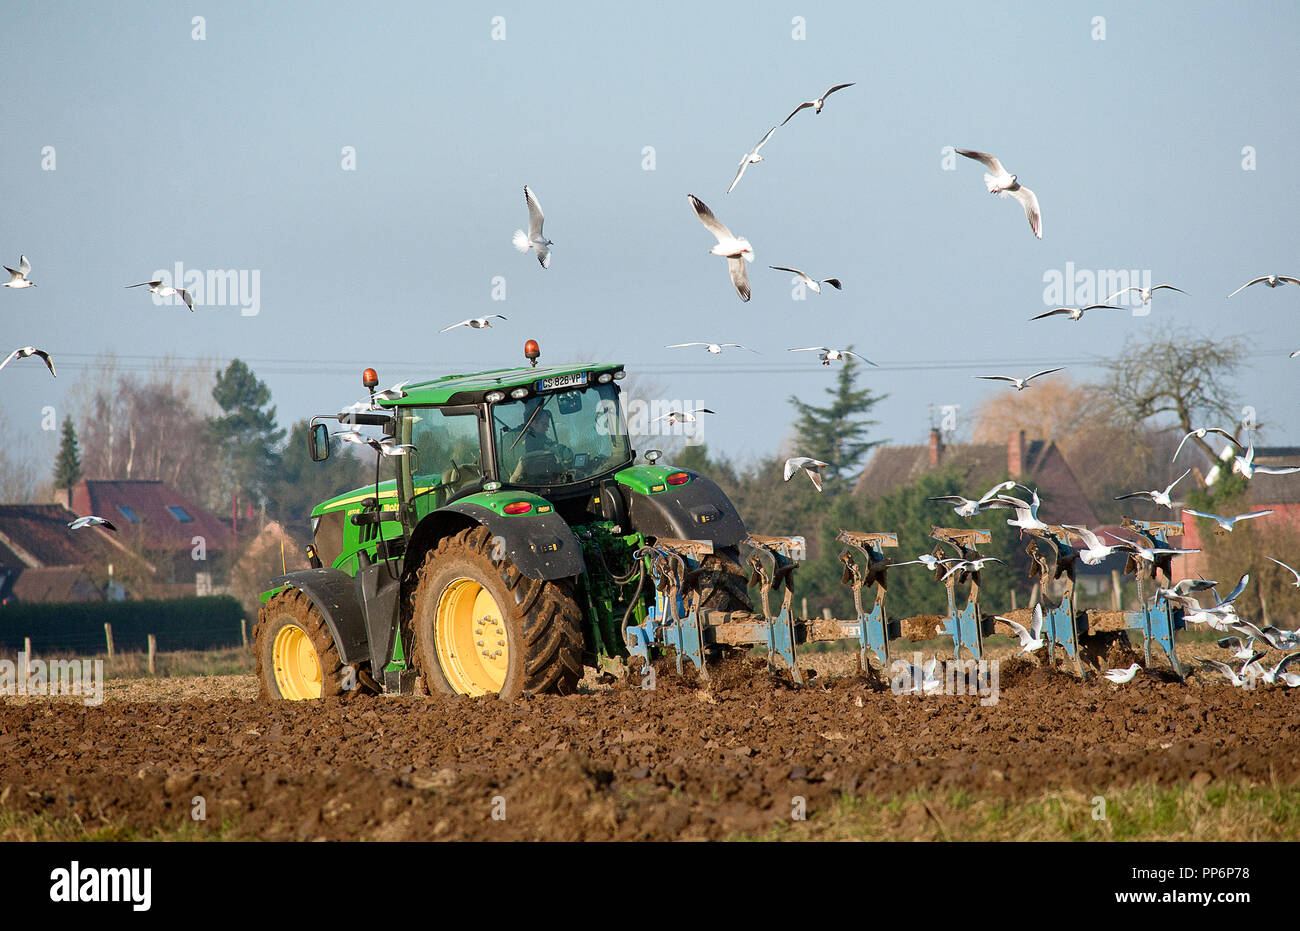 Farming: plowing. Tractor in a field followed by flying birds Stock Photo